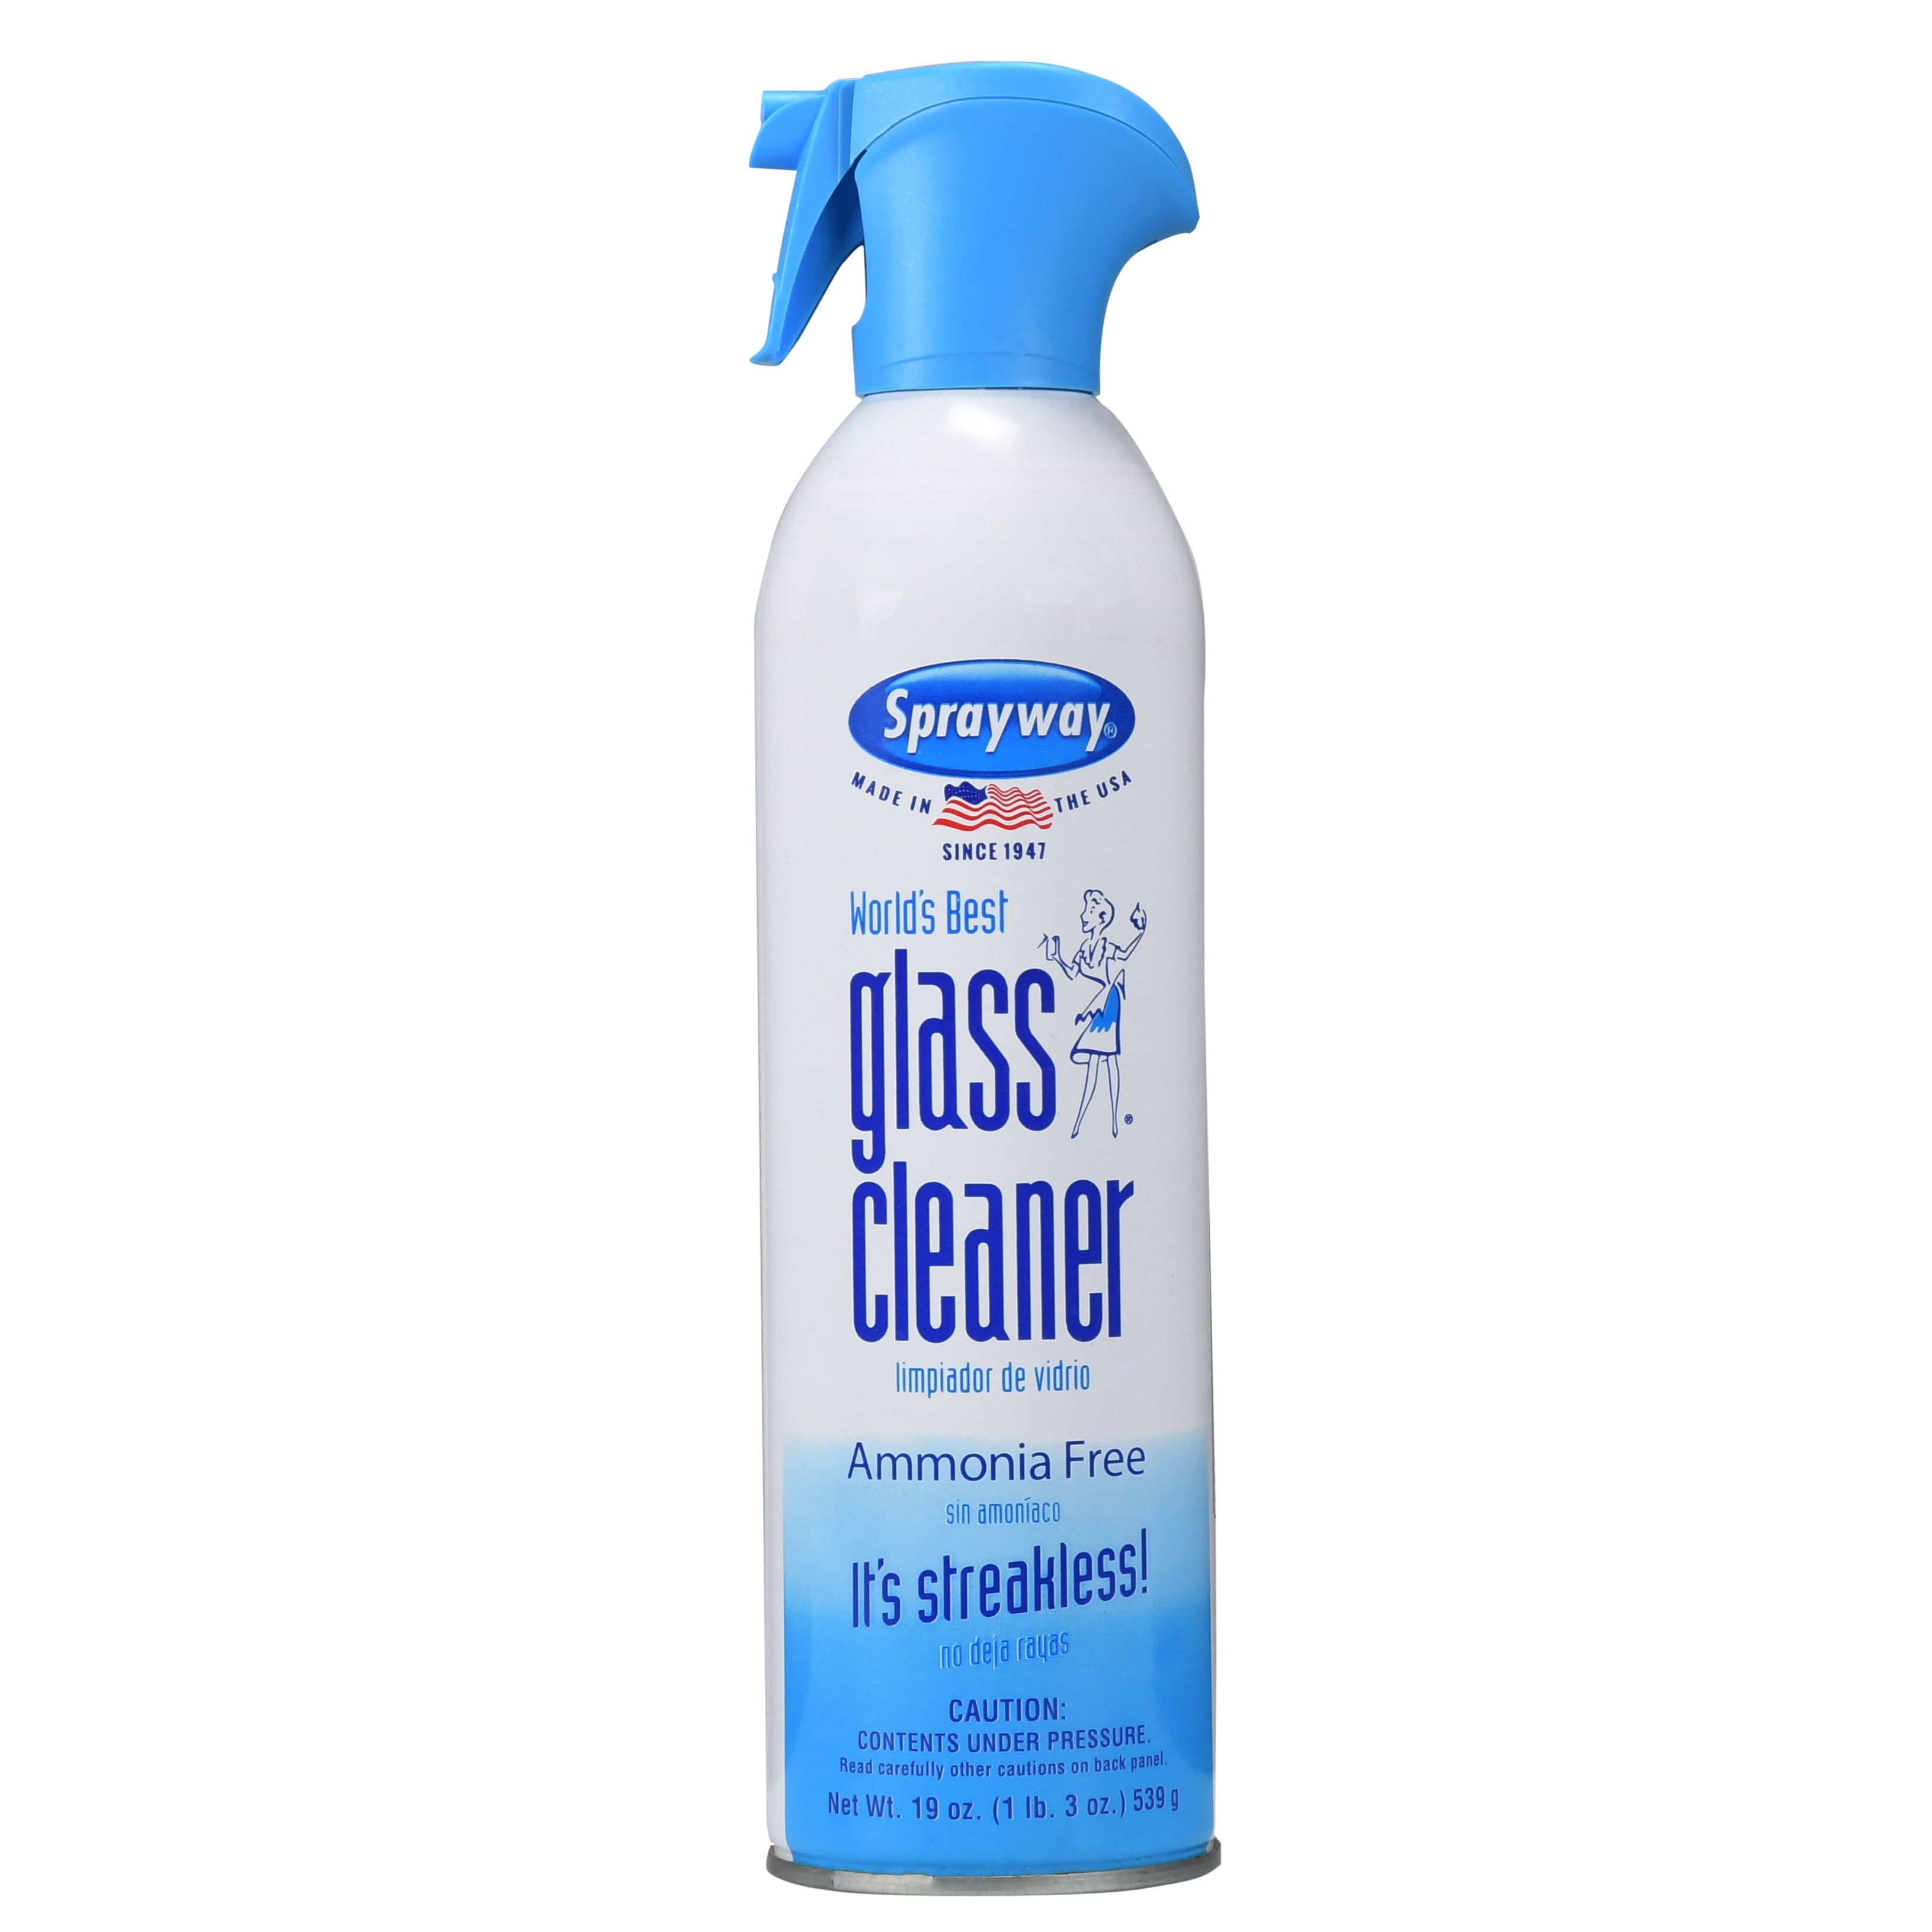 Sprayway Glass Cleaner, Clean Fresh Scent